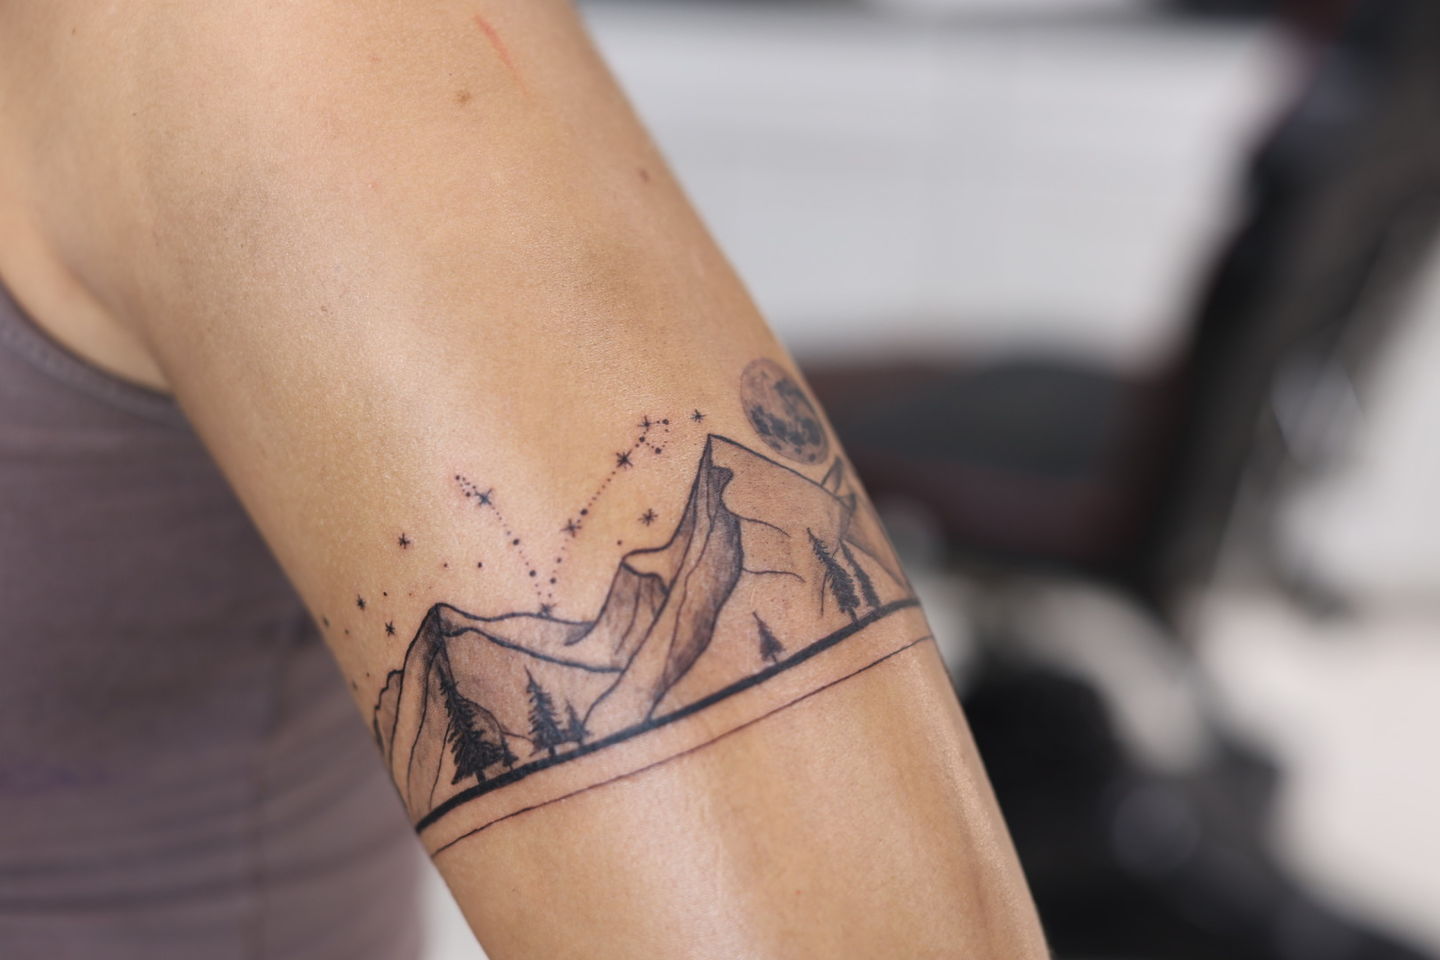 Mountain arm band for my client. Instagram @jamesvenicetattoo : r/tattoo